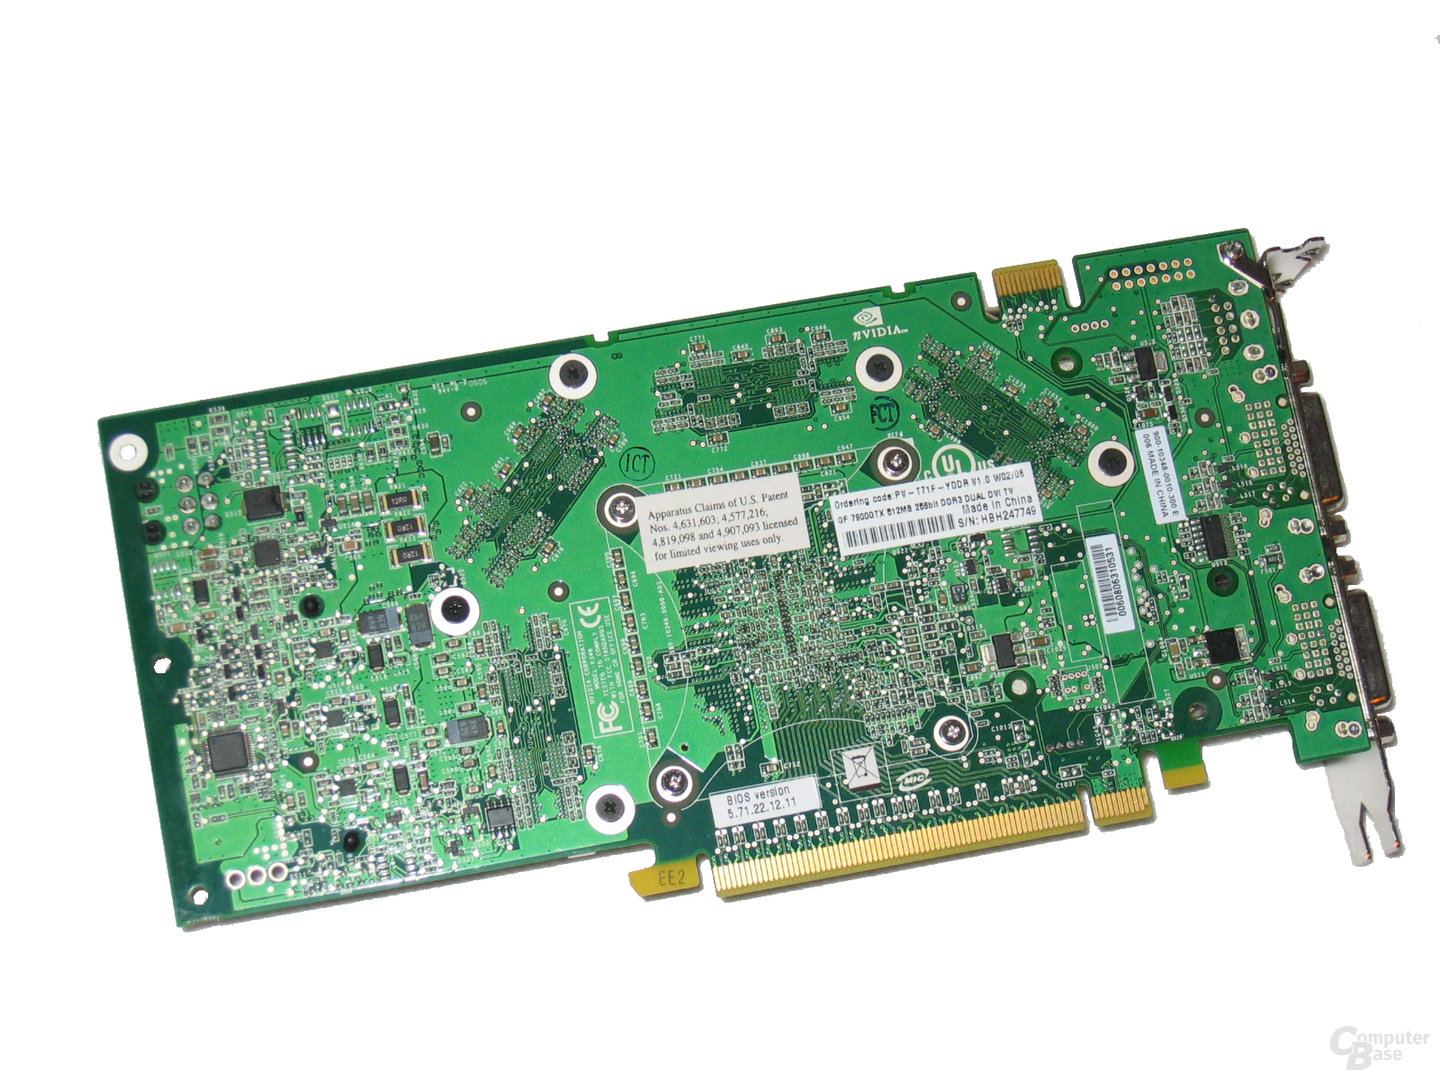 XFX GeForce 7900GTX 512MB DDR3 XXX Edition